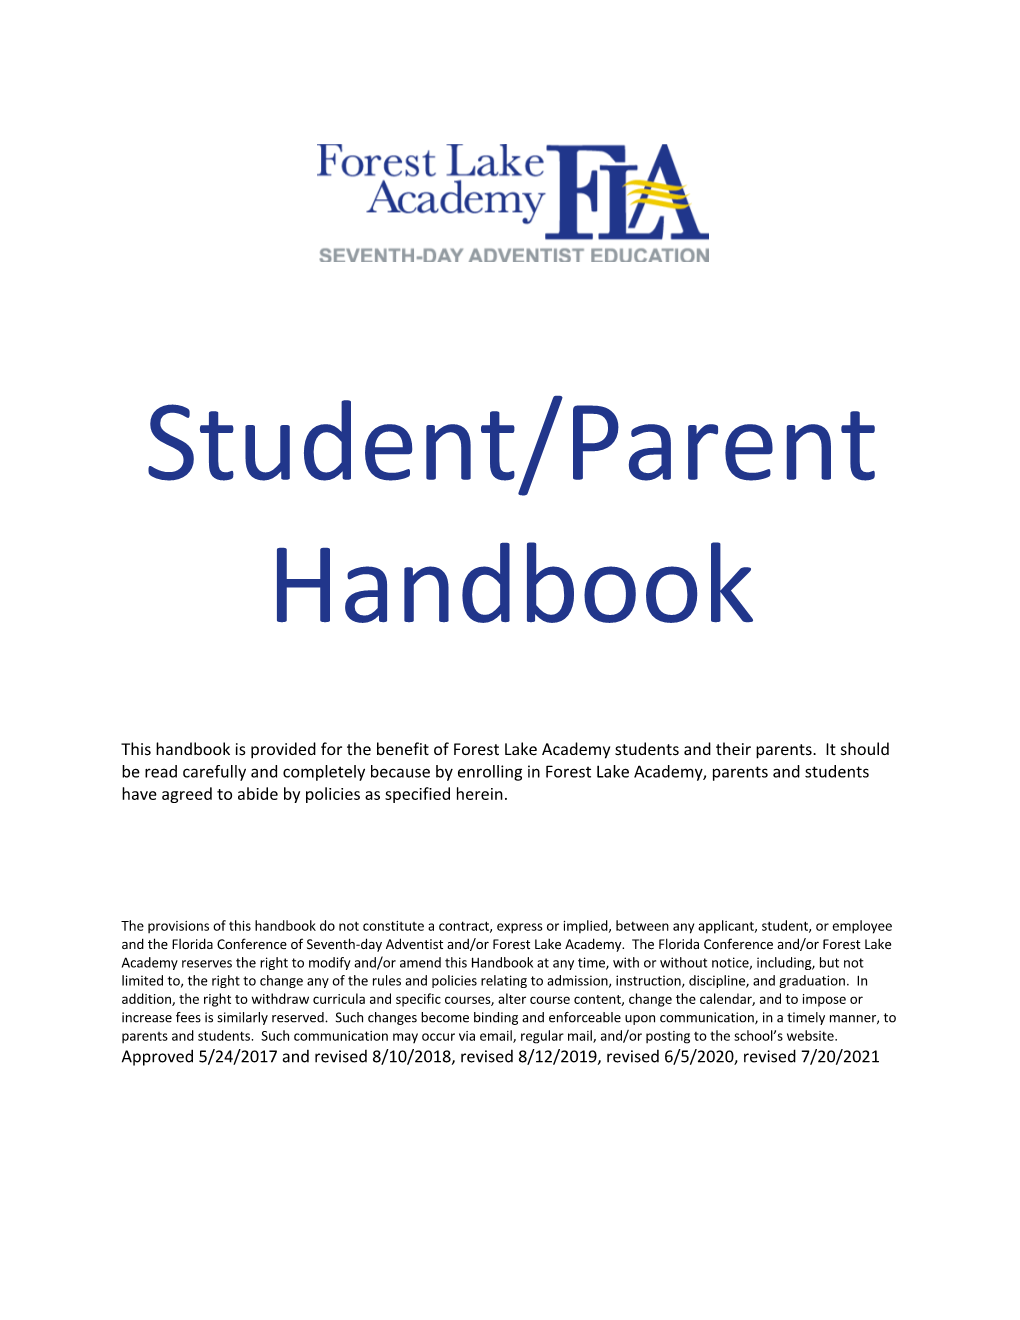 Student Handbook (Pdf)